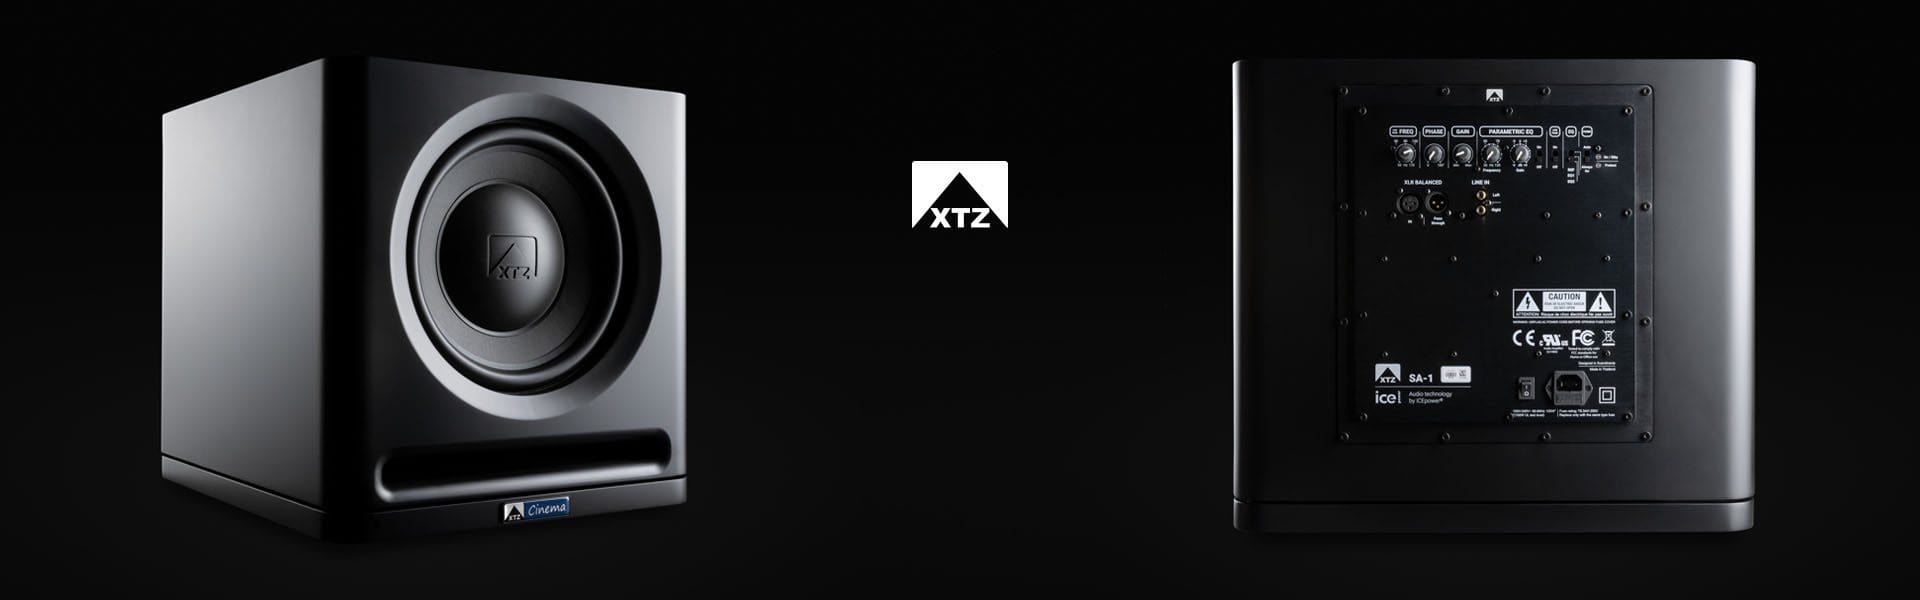 XTZ In Balance - High-End & Electronics